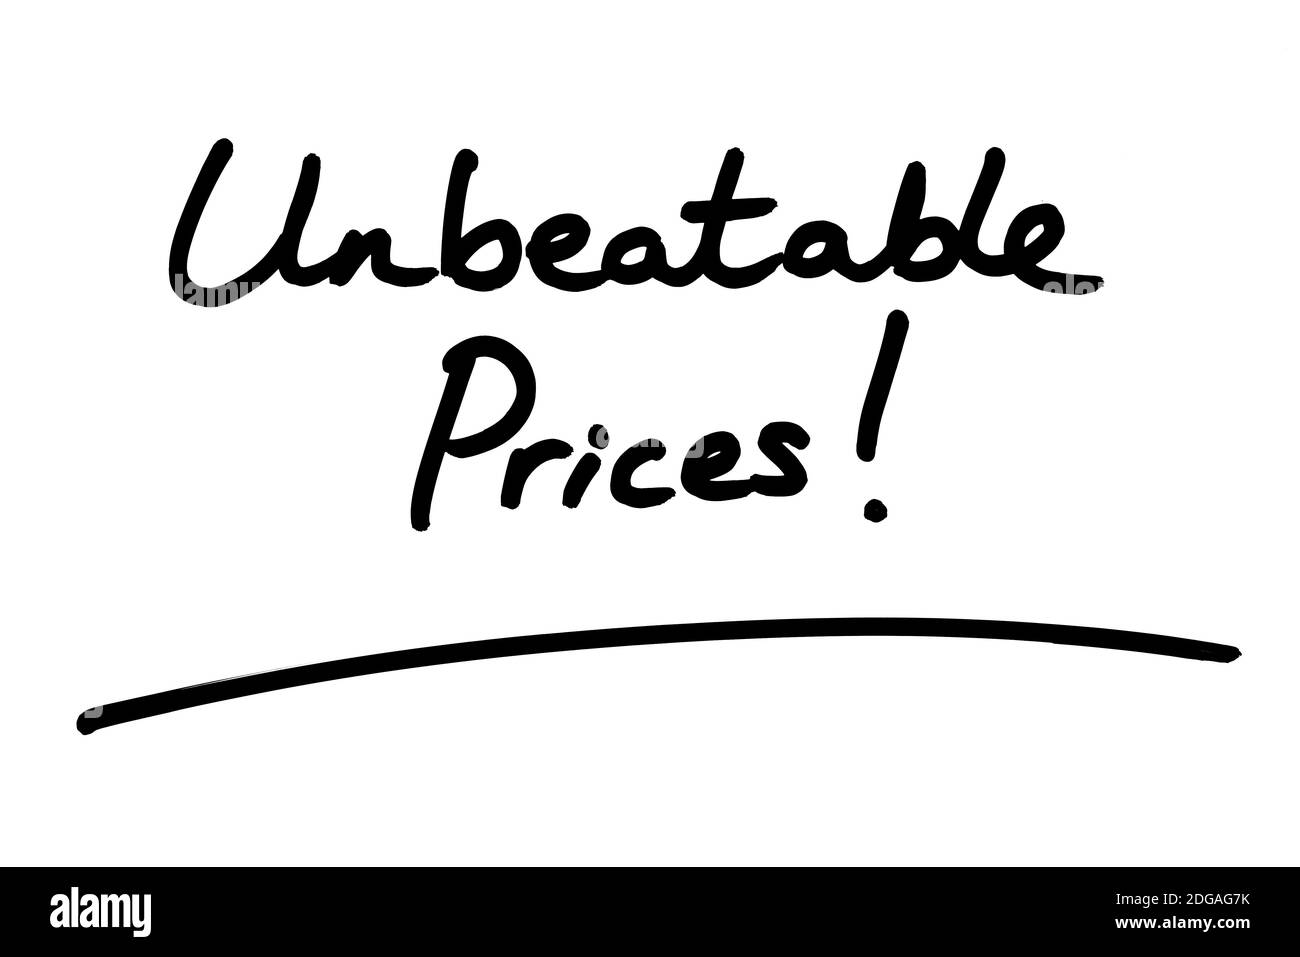 Unbeatable Prices! handwritten on a white background. Stock Photo